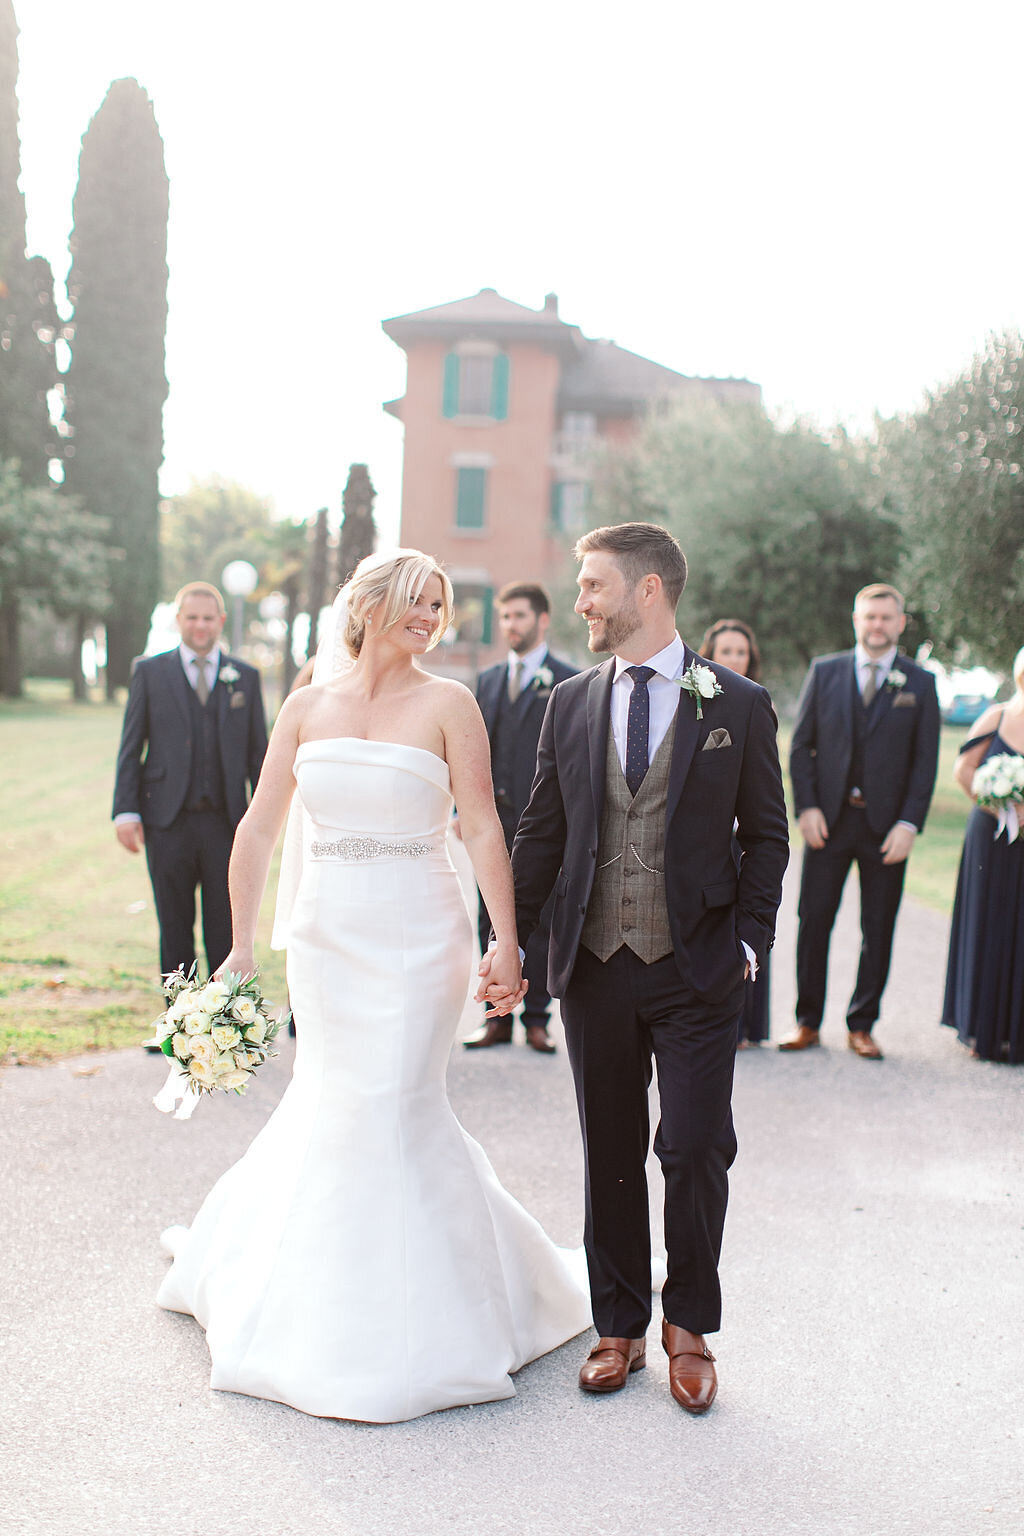 Destination Weddings | Twelfth Night Events - Italy Wedding Planner40